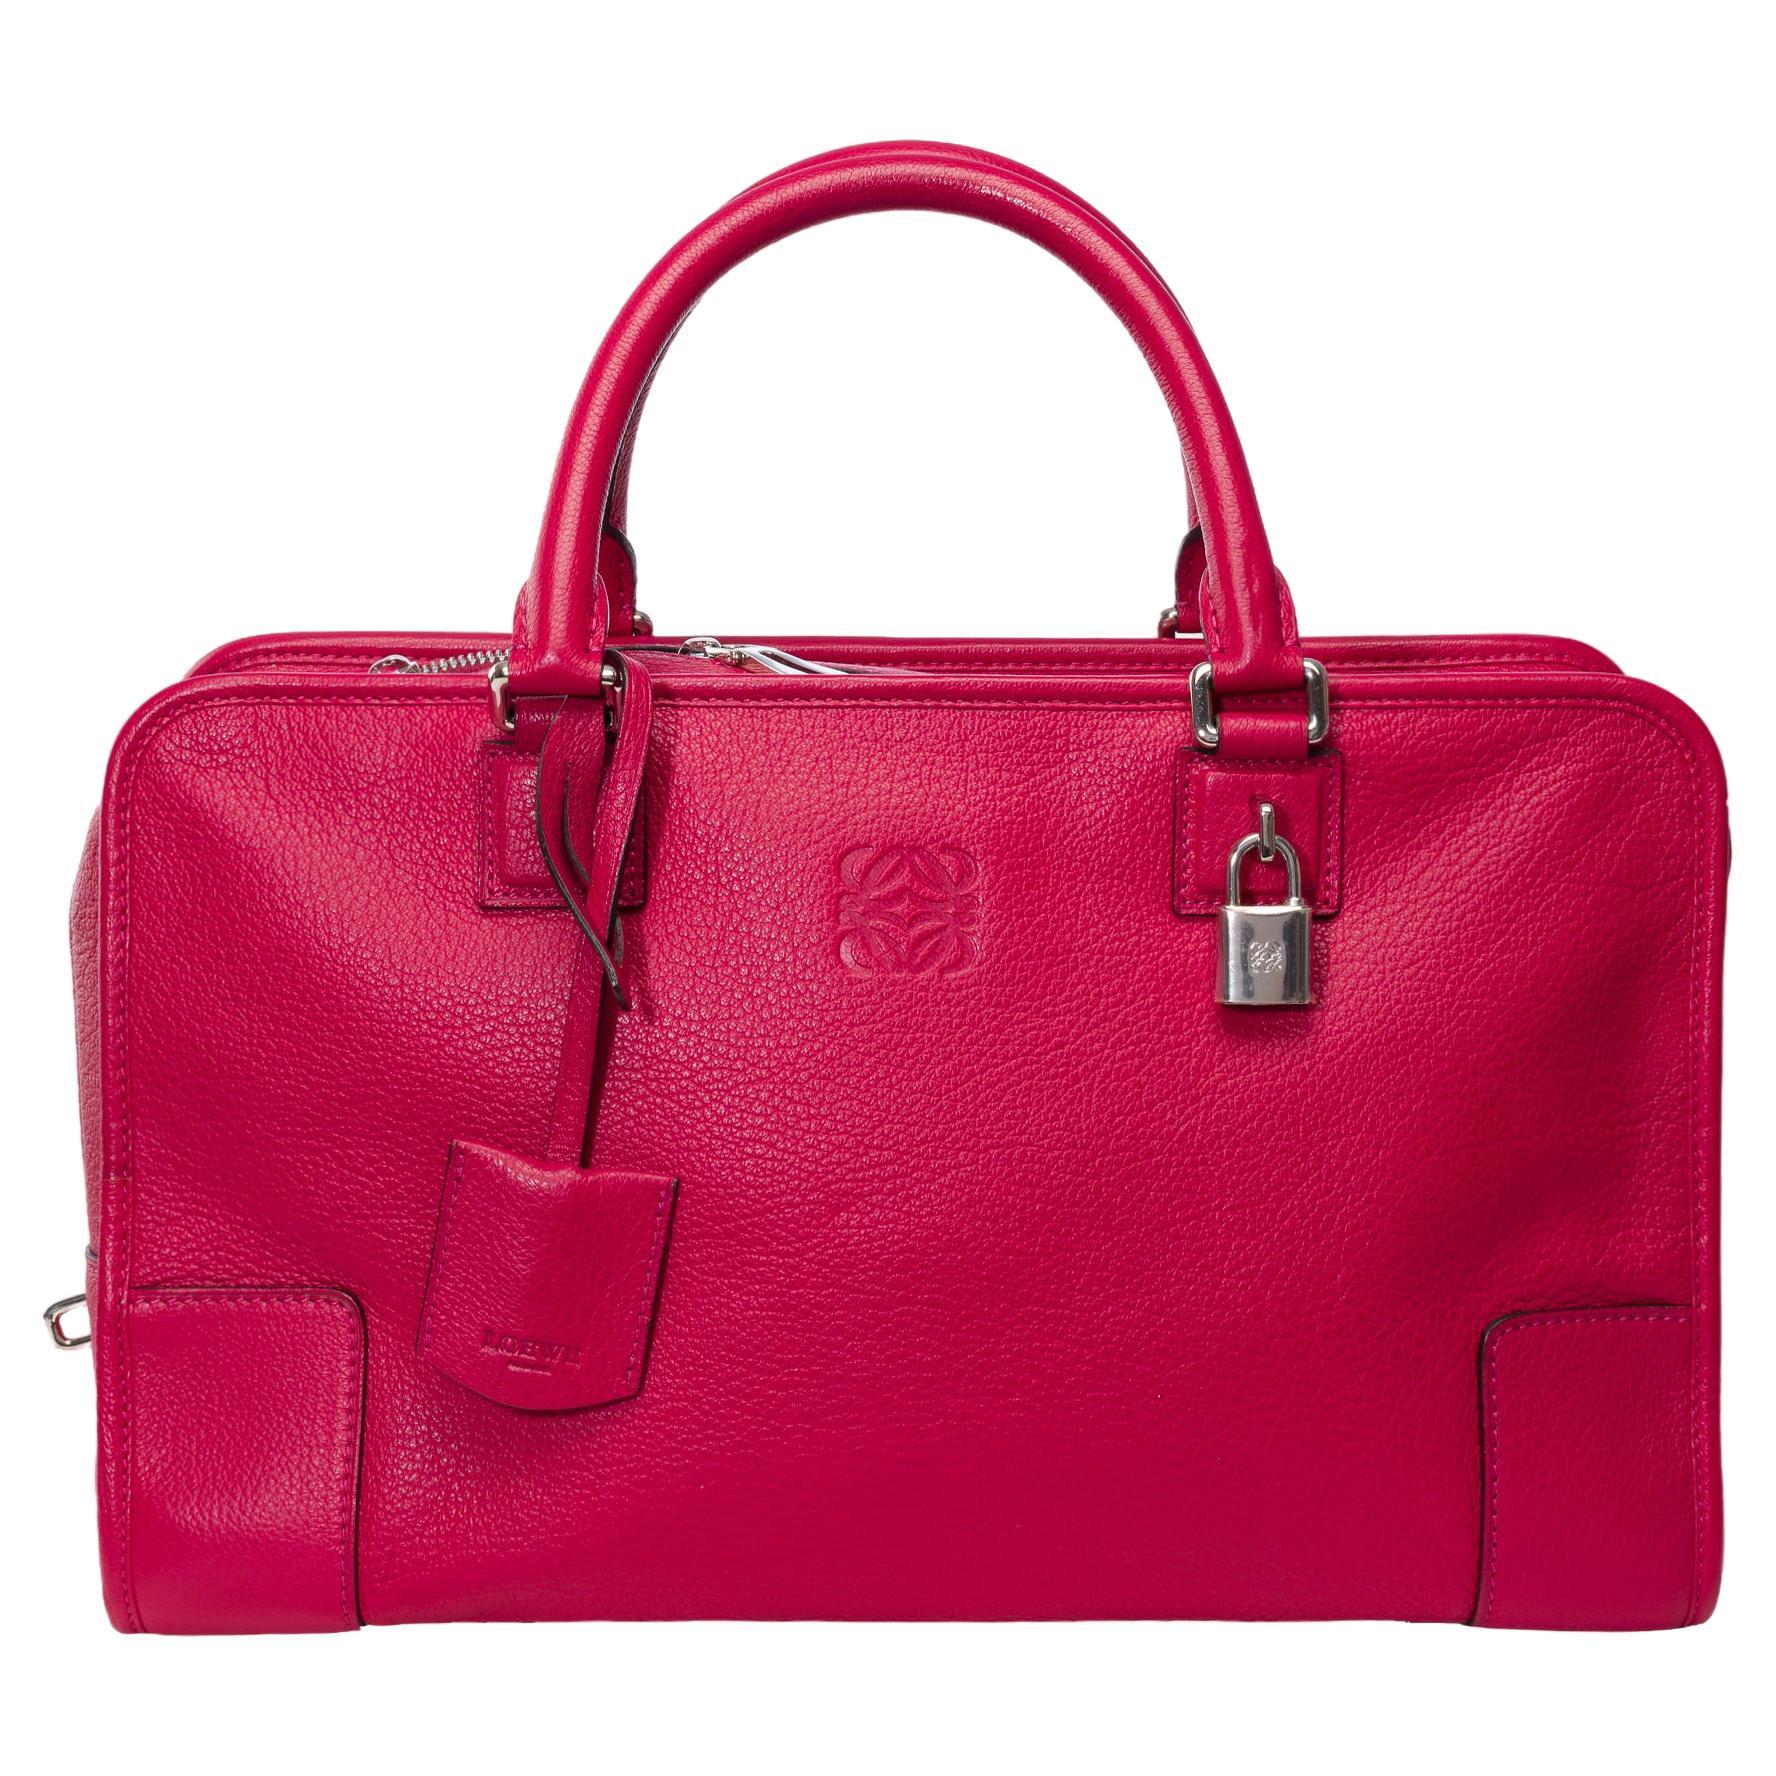 Delightful Loewe Amazona 36 (GM) handbag in red leather, SHW For Sale